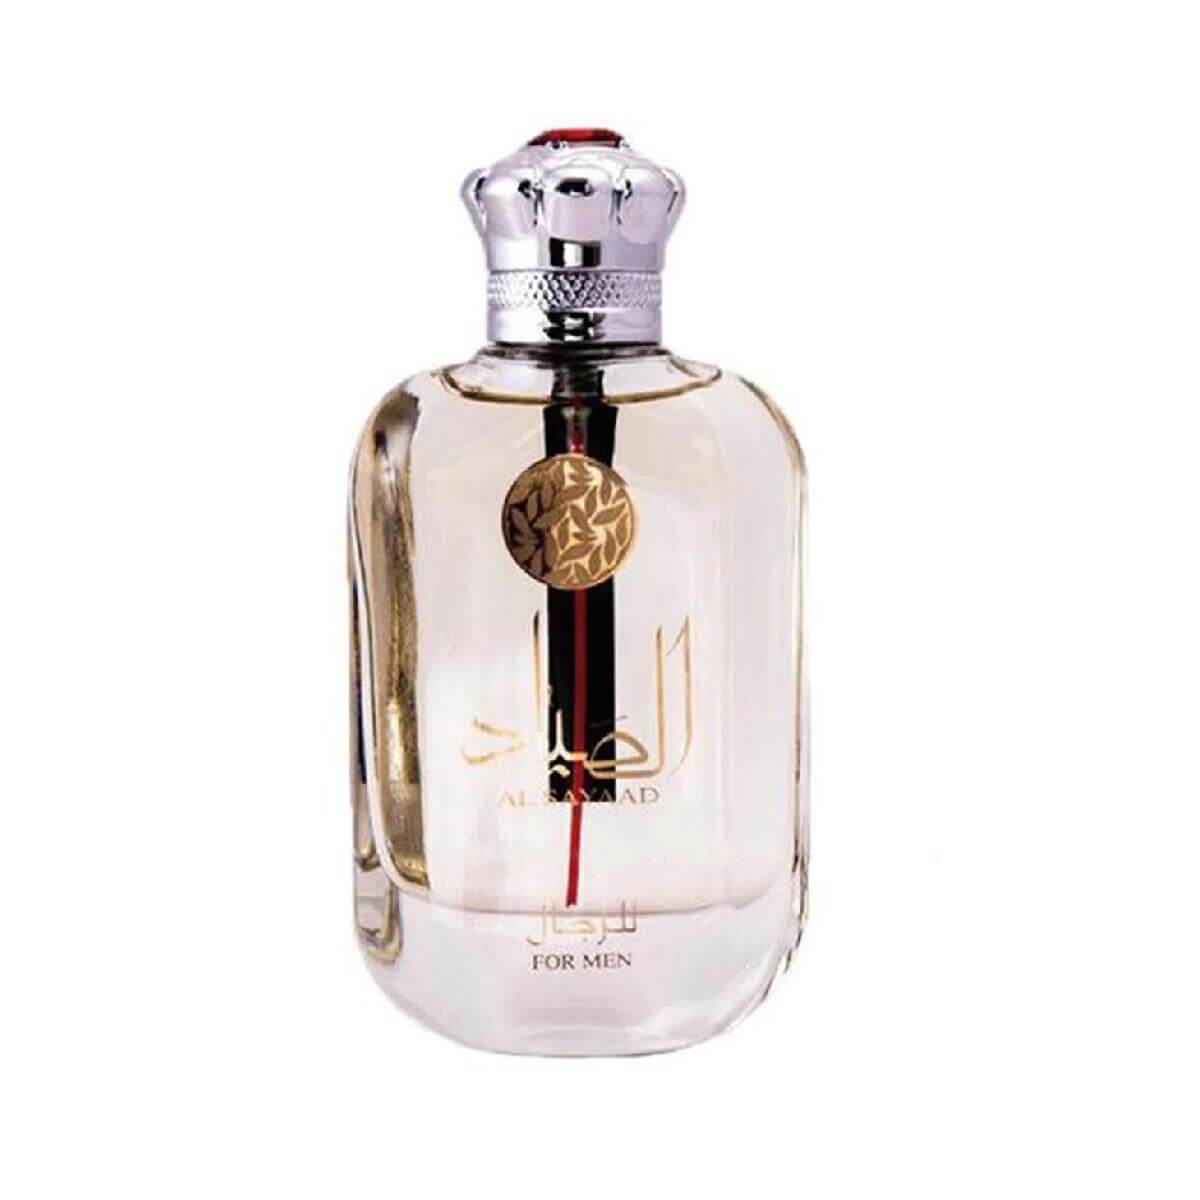 Al Sayaad For Men Perfume / Eau De Parfum By Ard Al Zaafaran